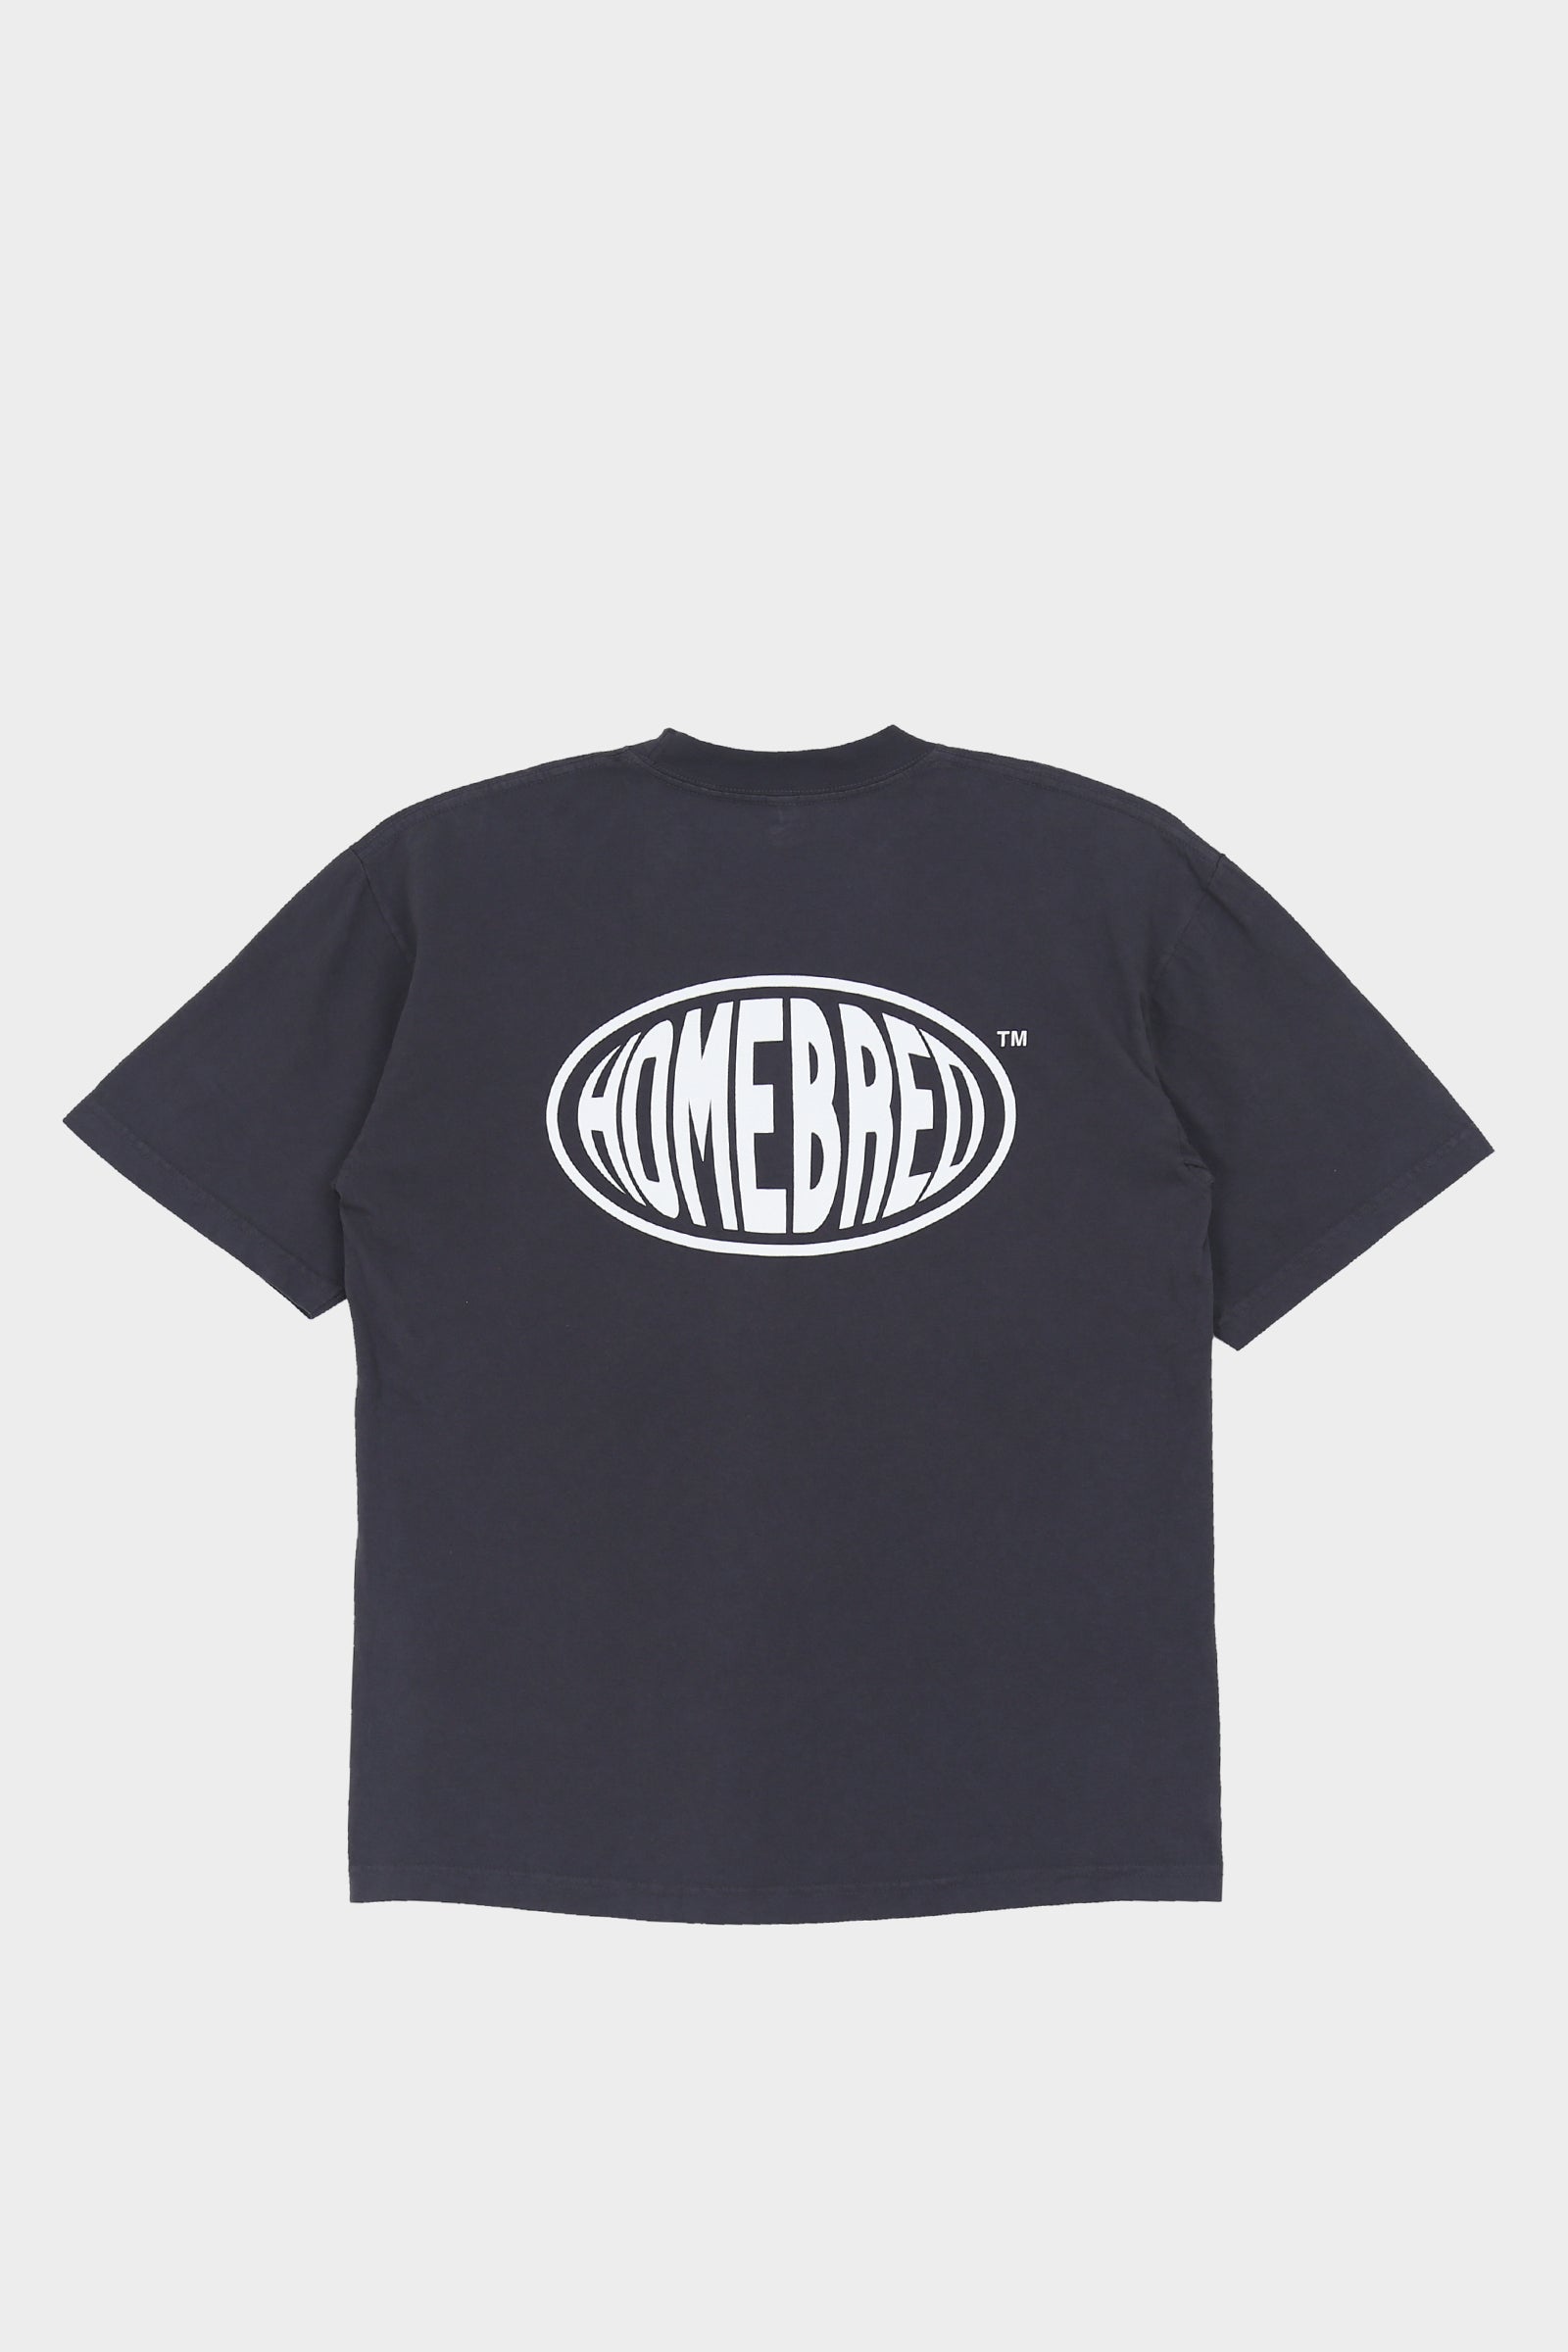 Homebred Ovoid T-shirt